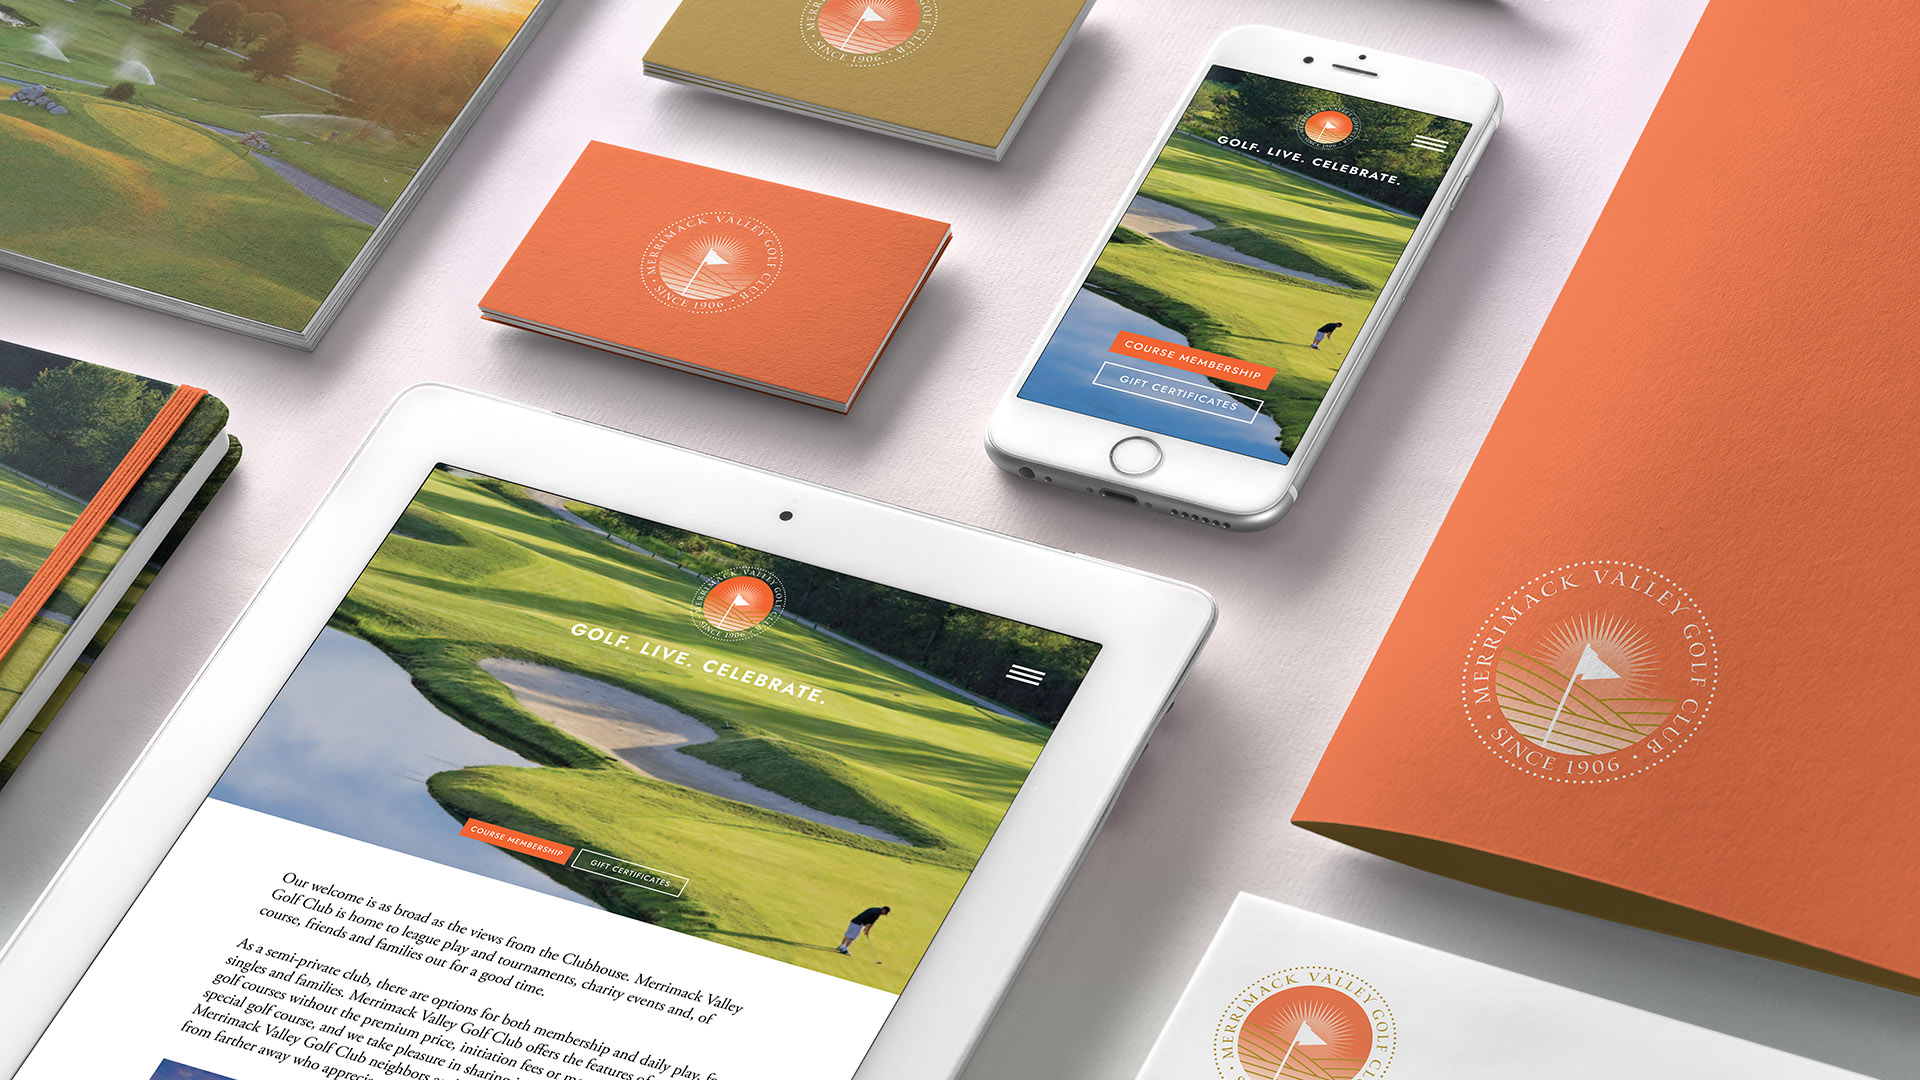 merrimack valley golf club ipad and iphone with folder branding by boston graphic design studio